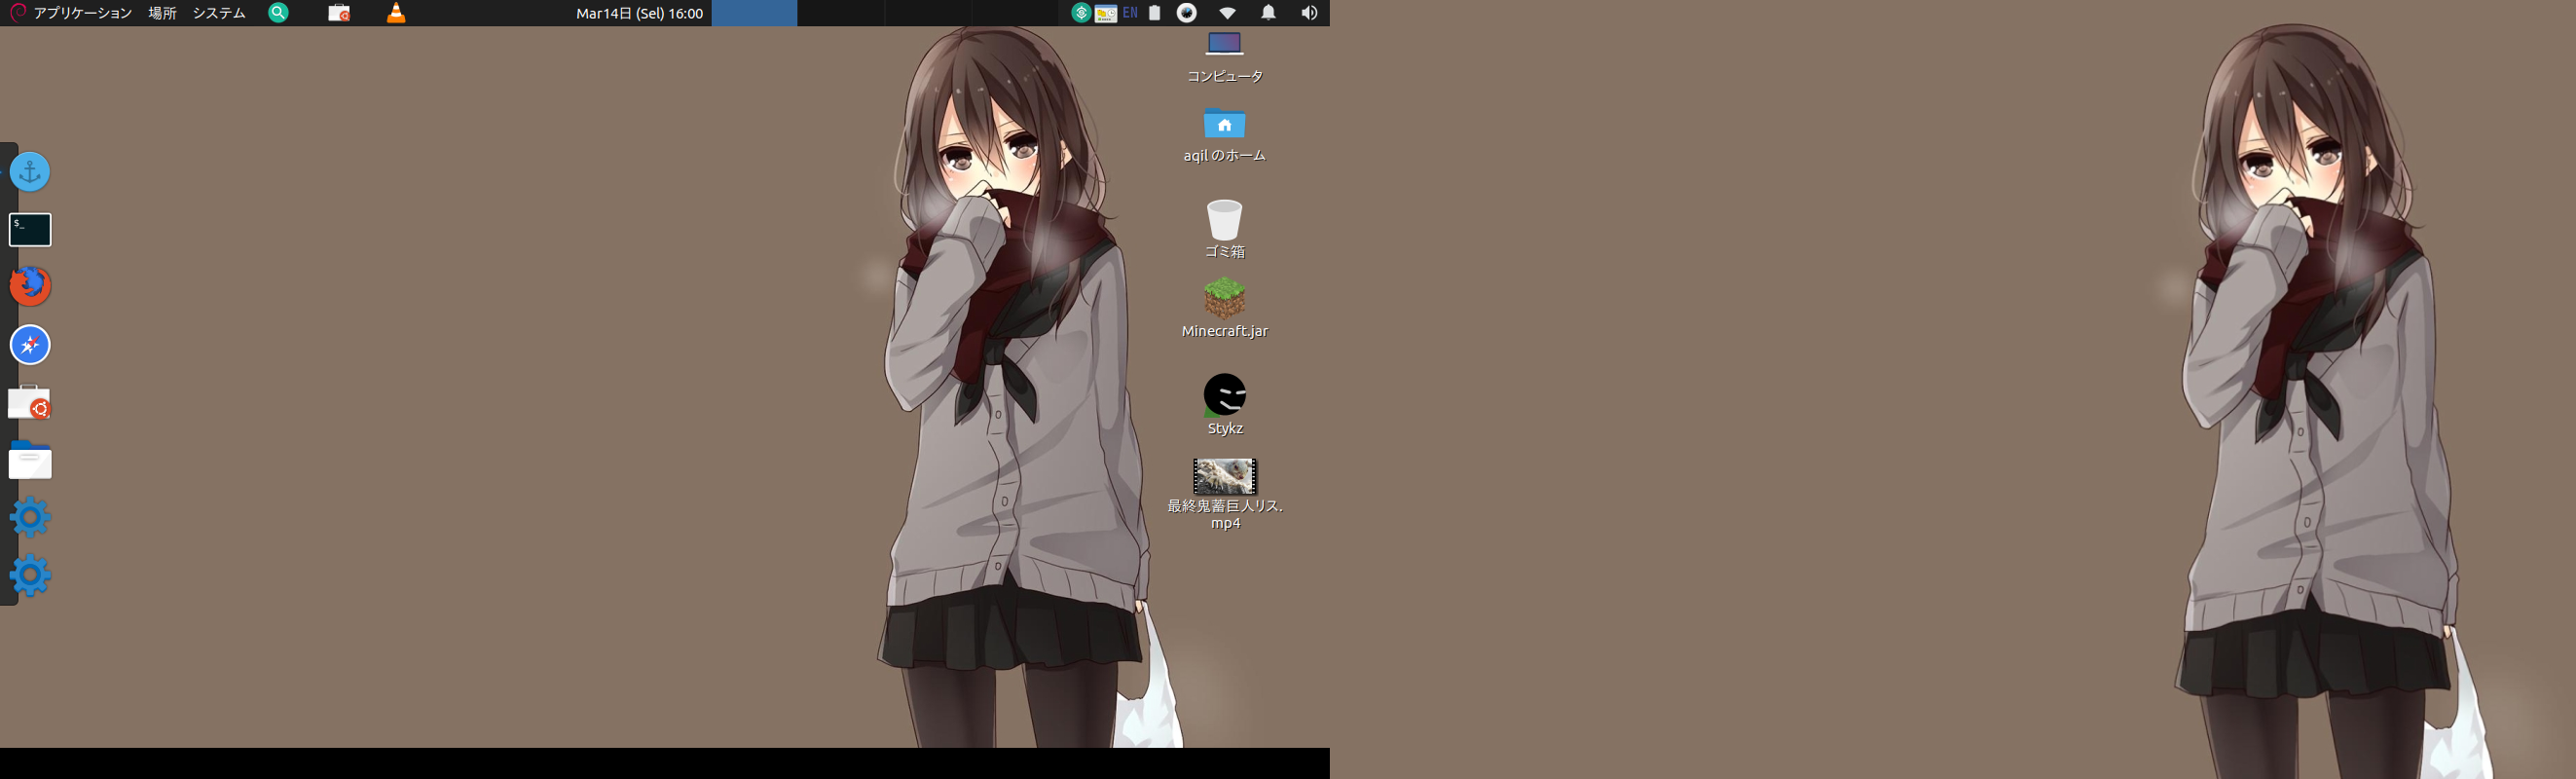 My Desktop Today Screenshots Ubuntu Mate Community